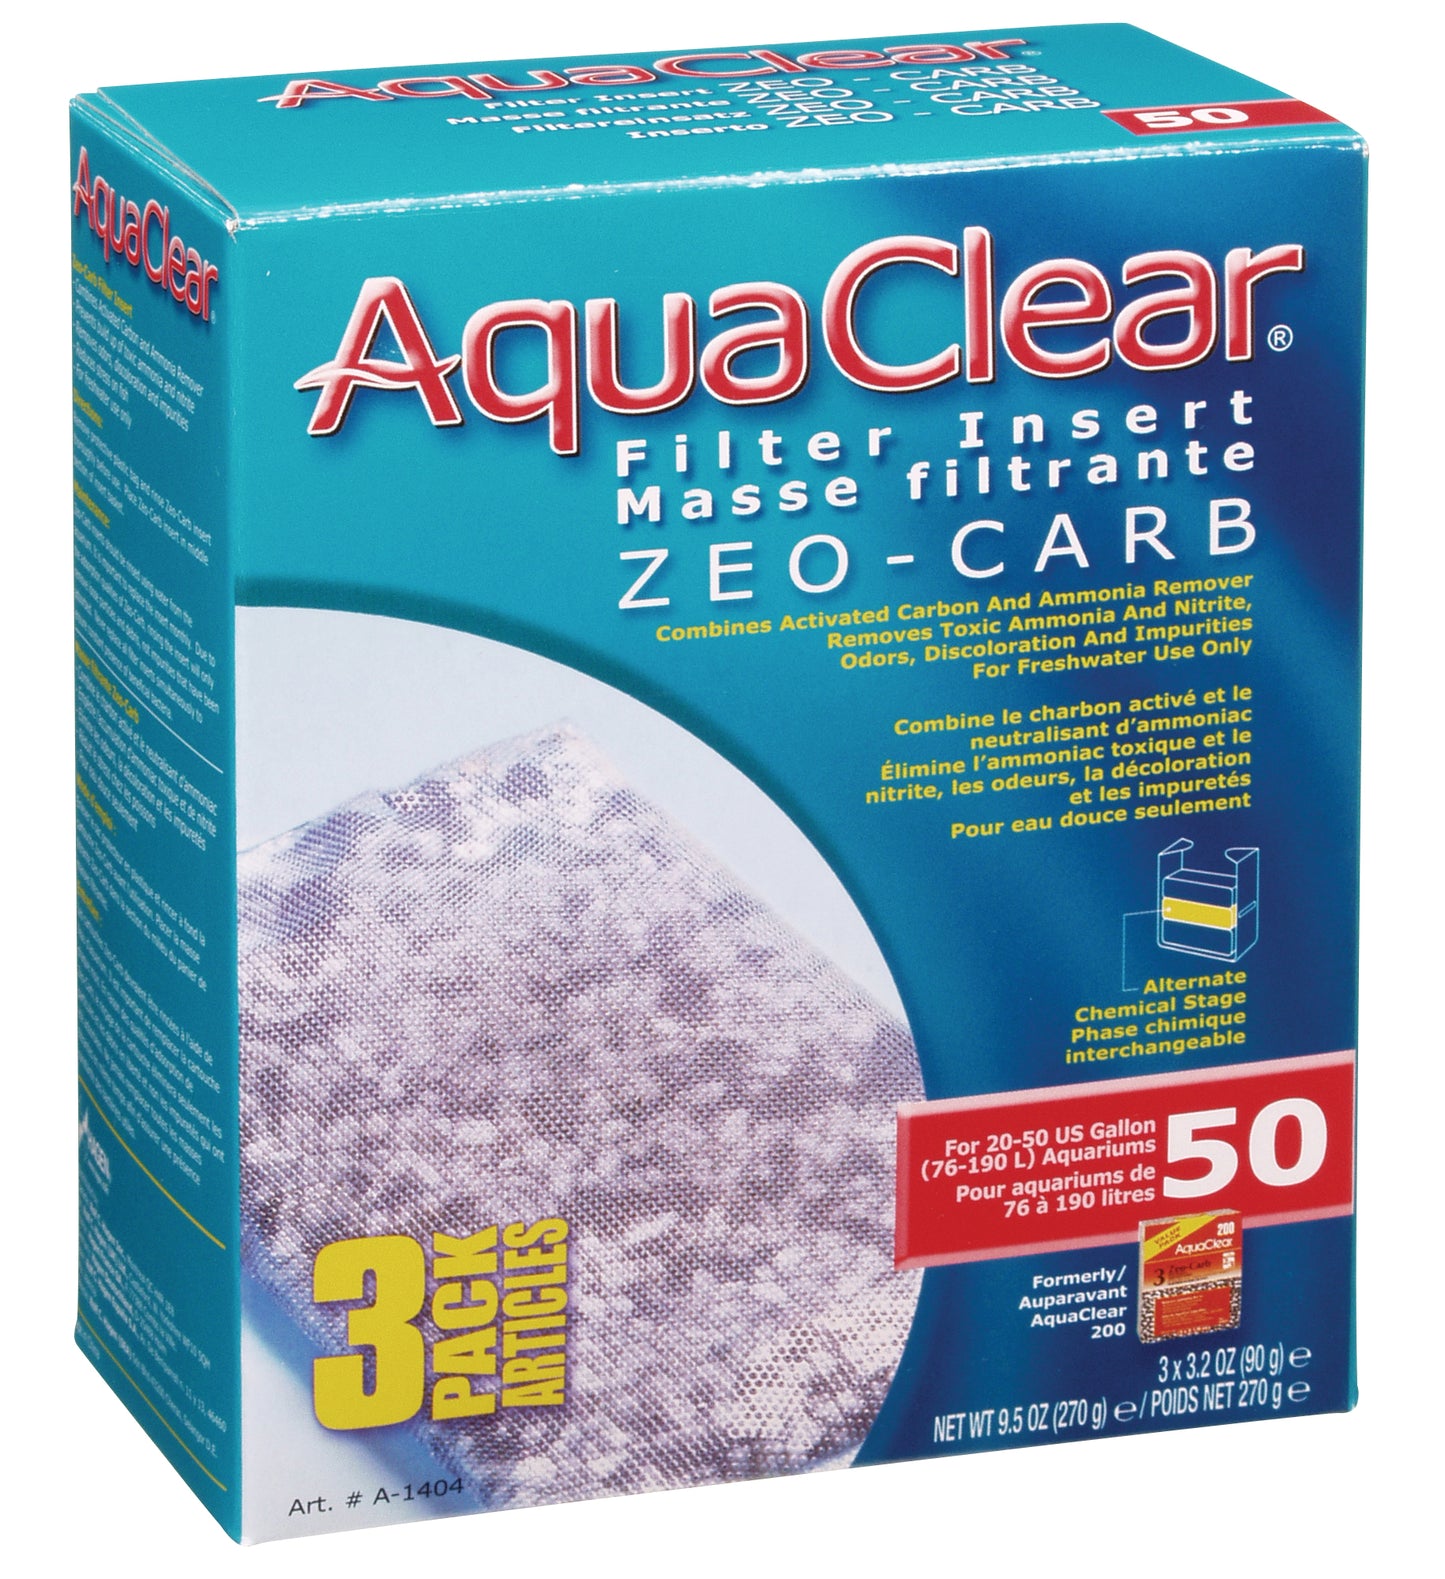 AquaClear Zeo-Carb Filter 3 Pack